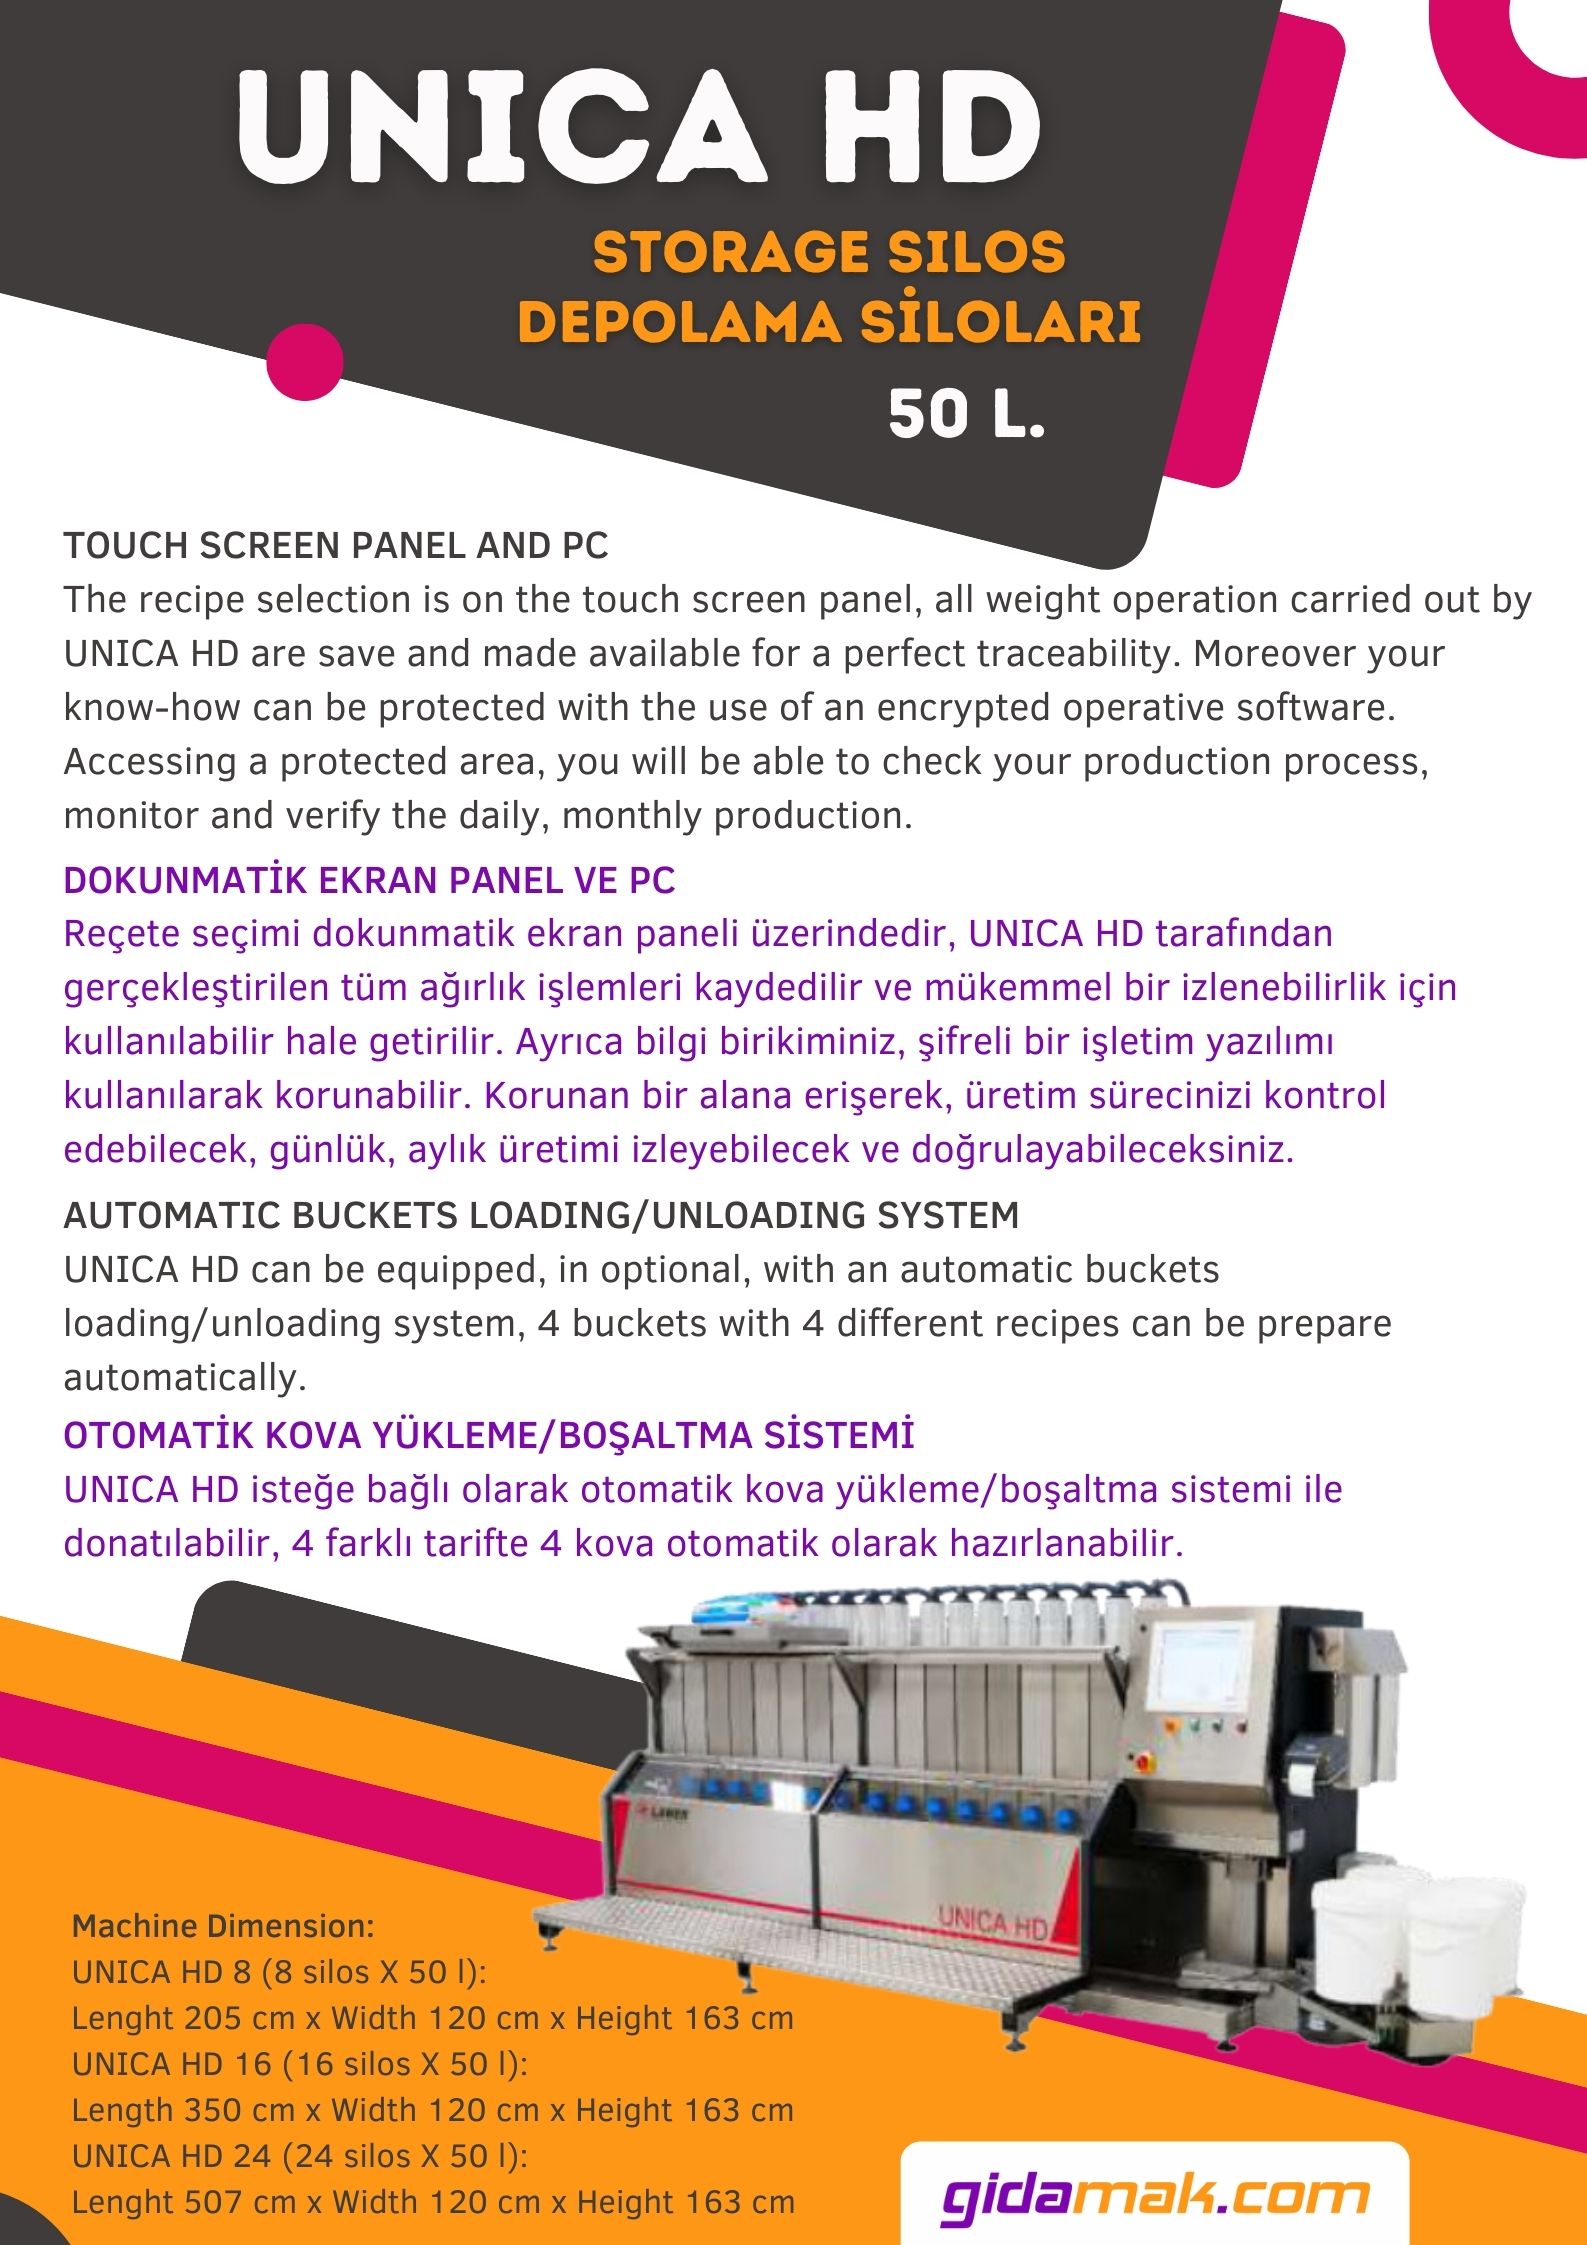 Unica HD Powder Weighing and Dispensing Machine